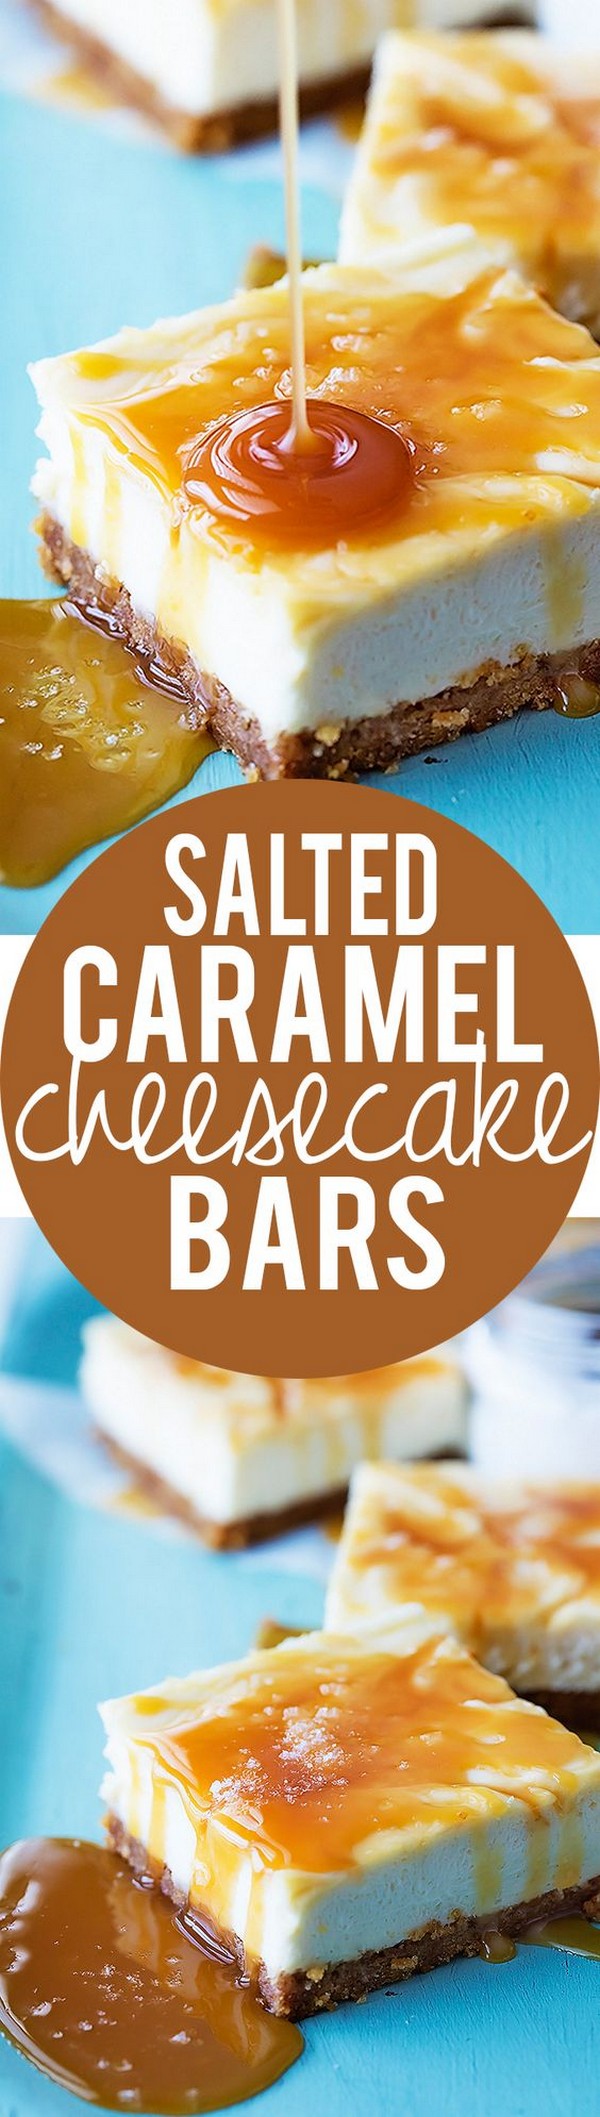 Salted Caramel Cheesecake Bars